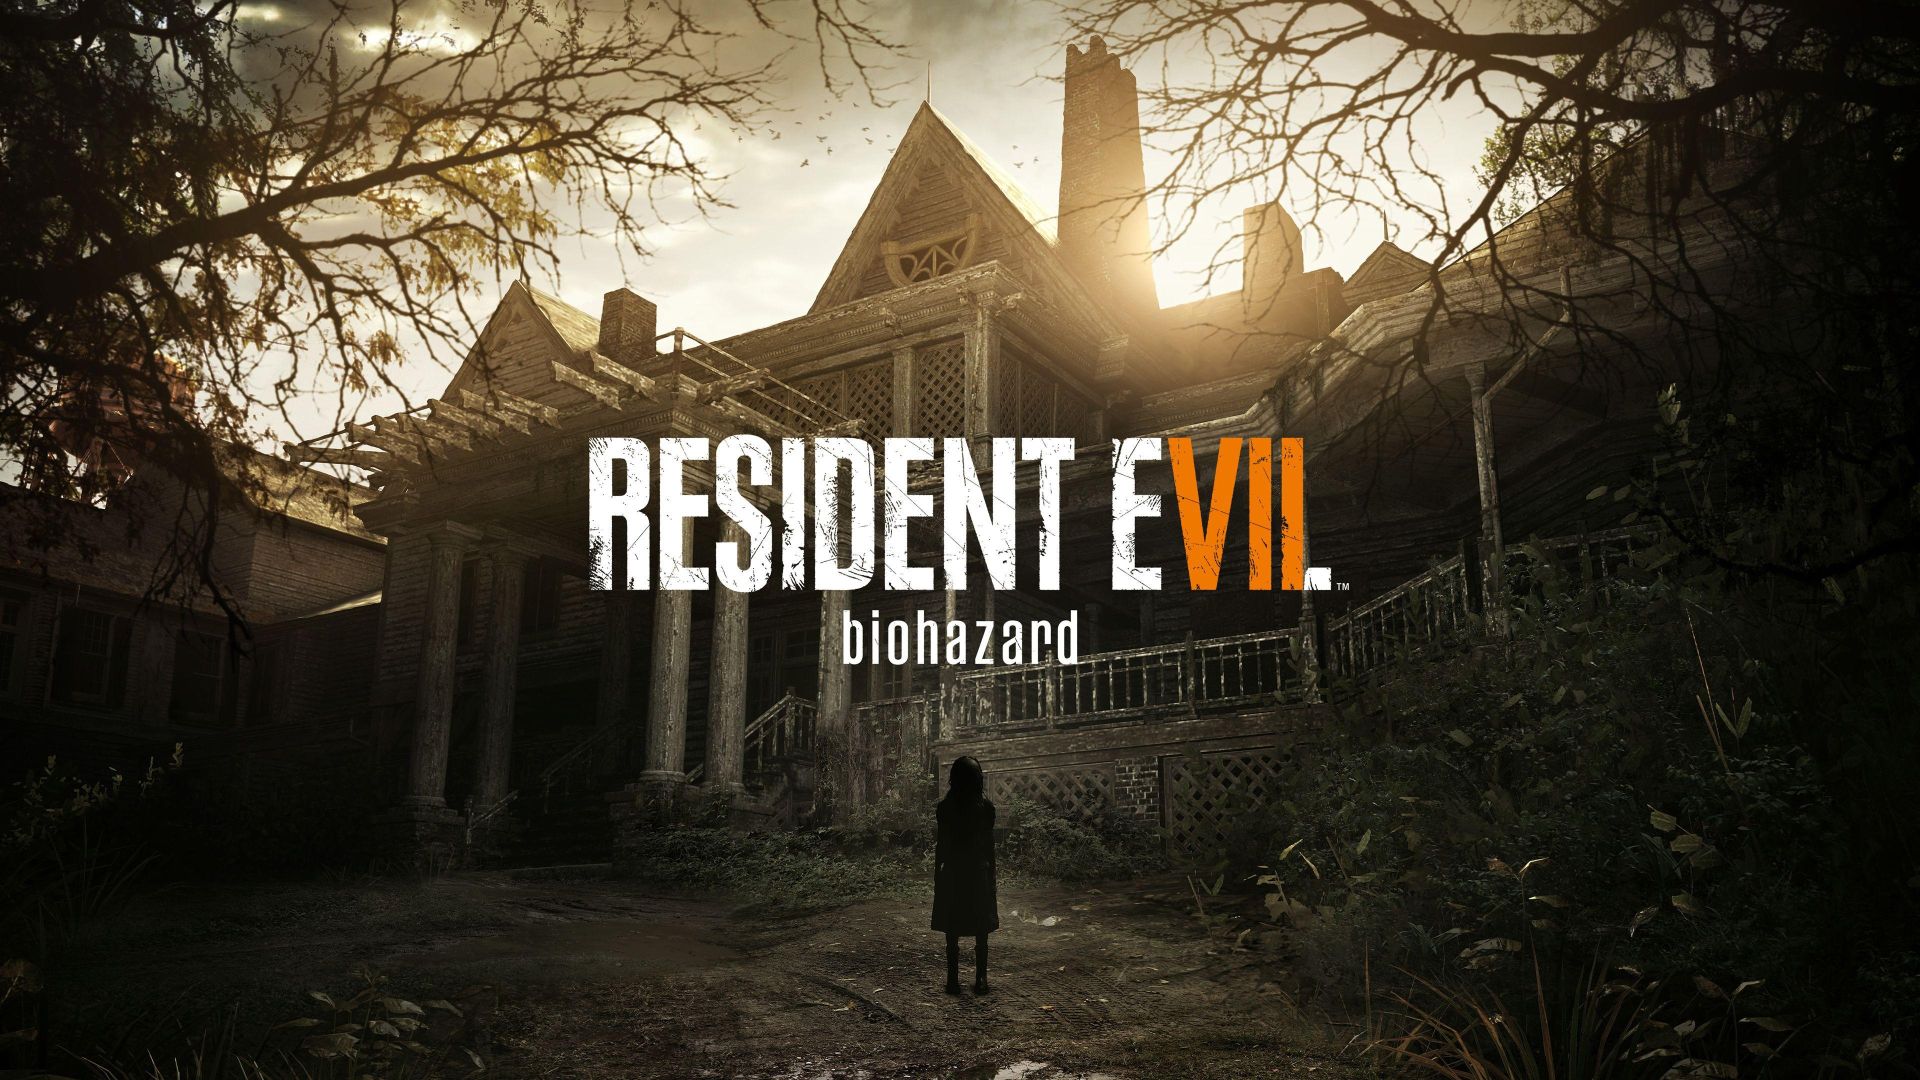 Tri Resident Evil igre dobivaju nadogradnju